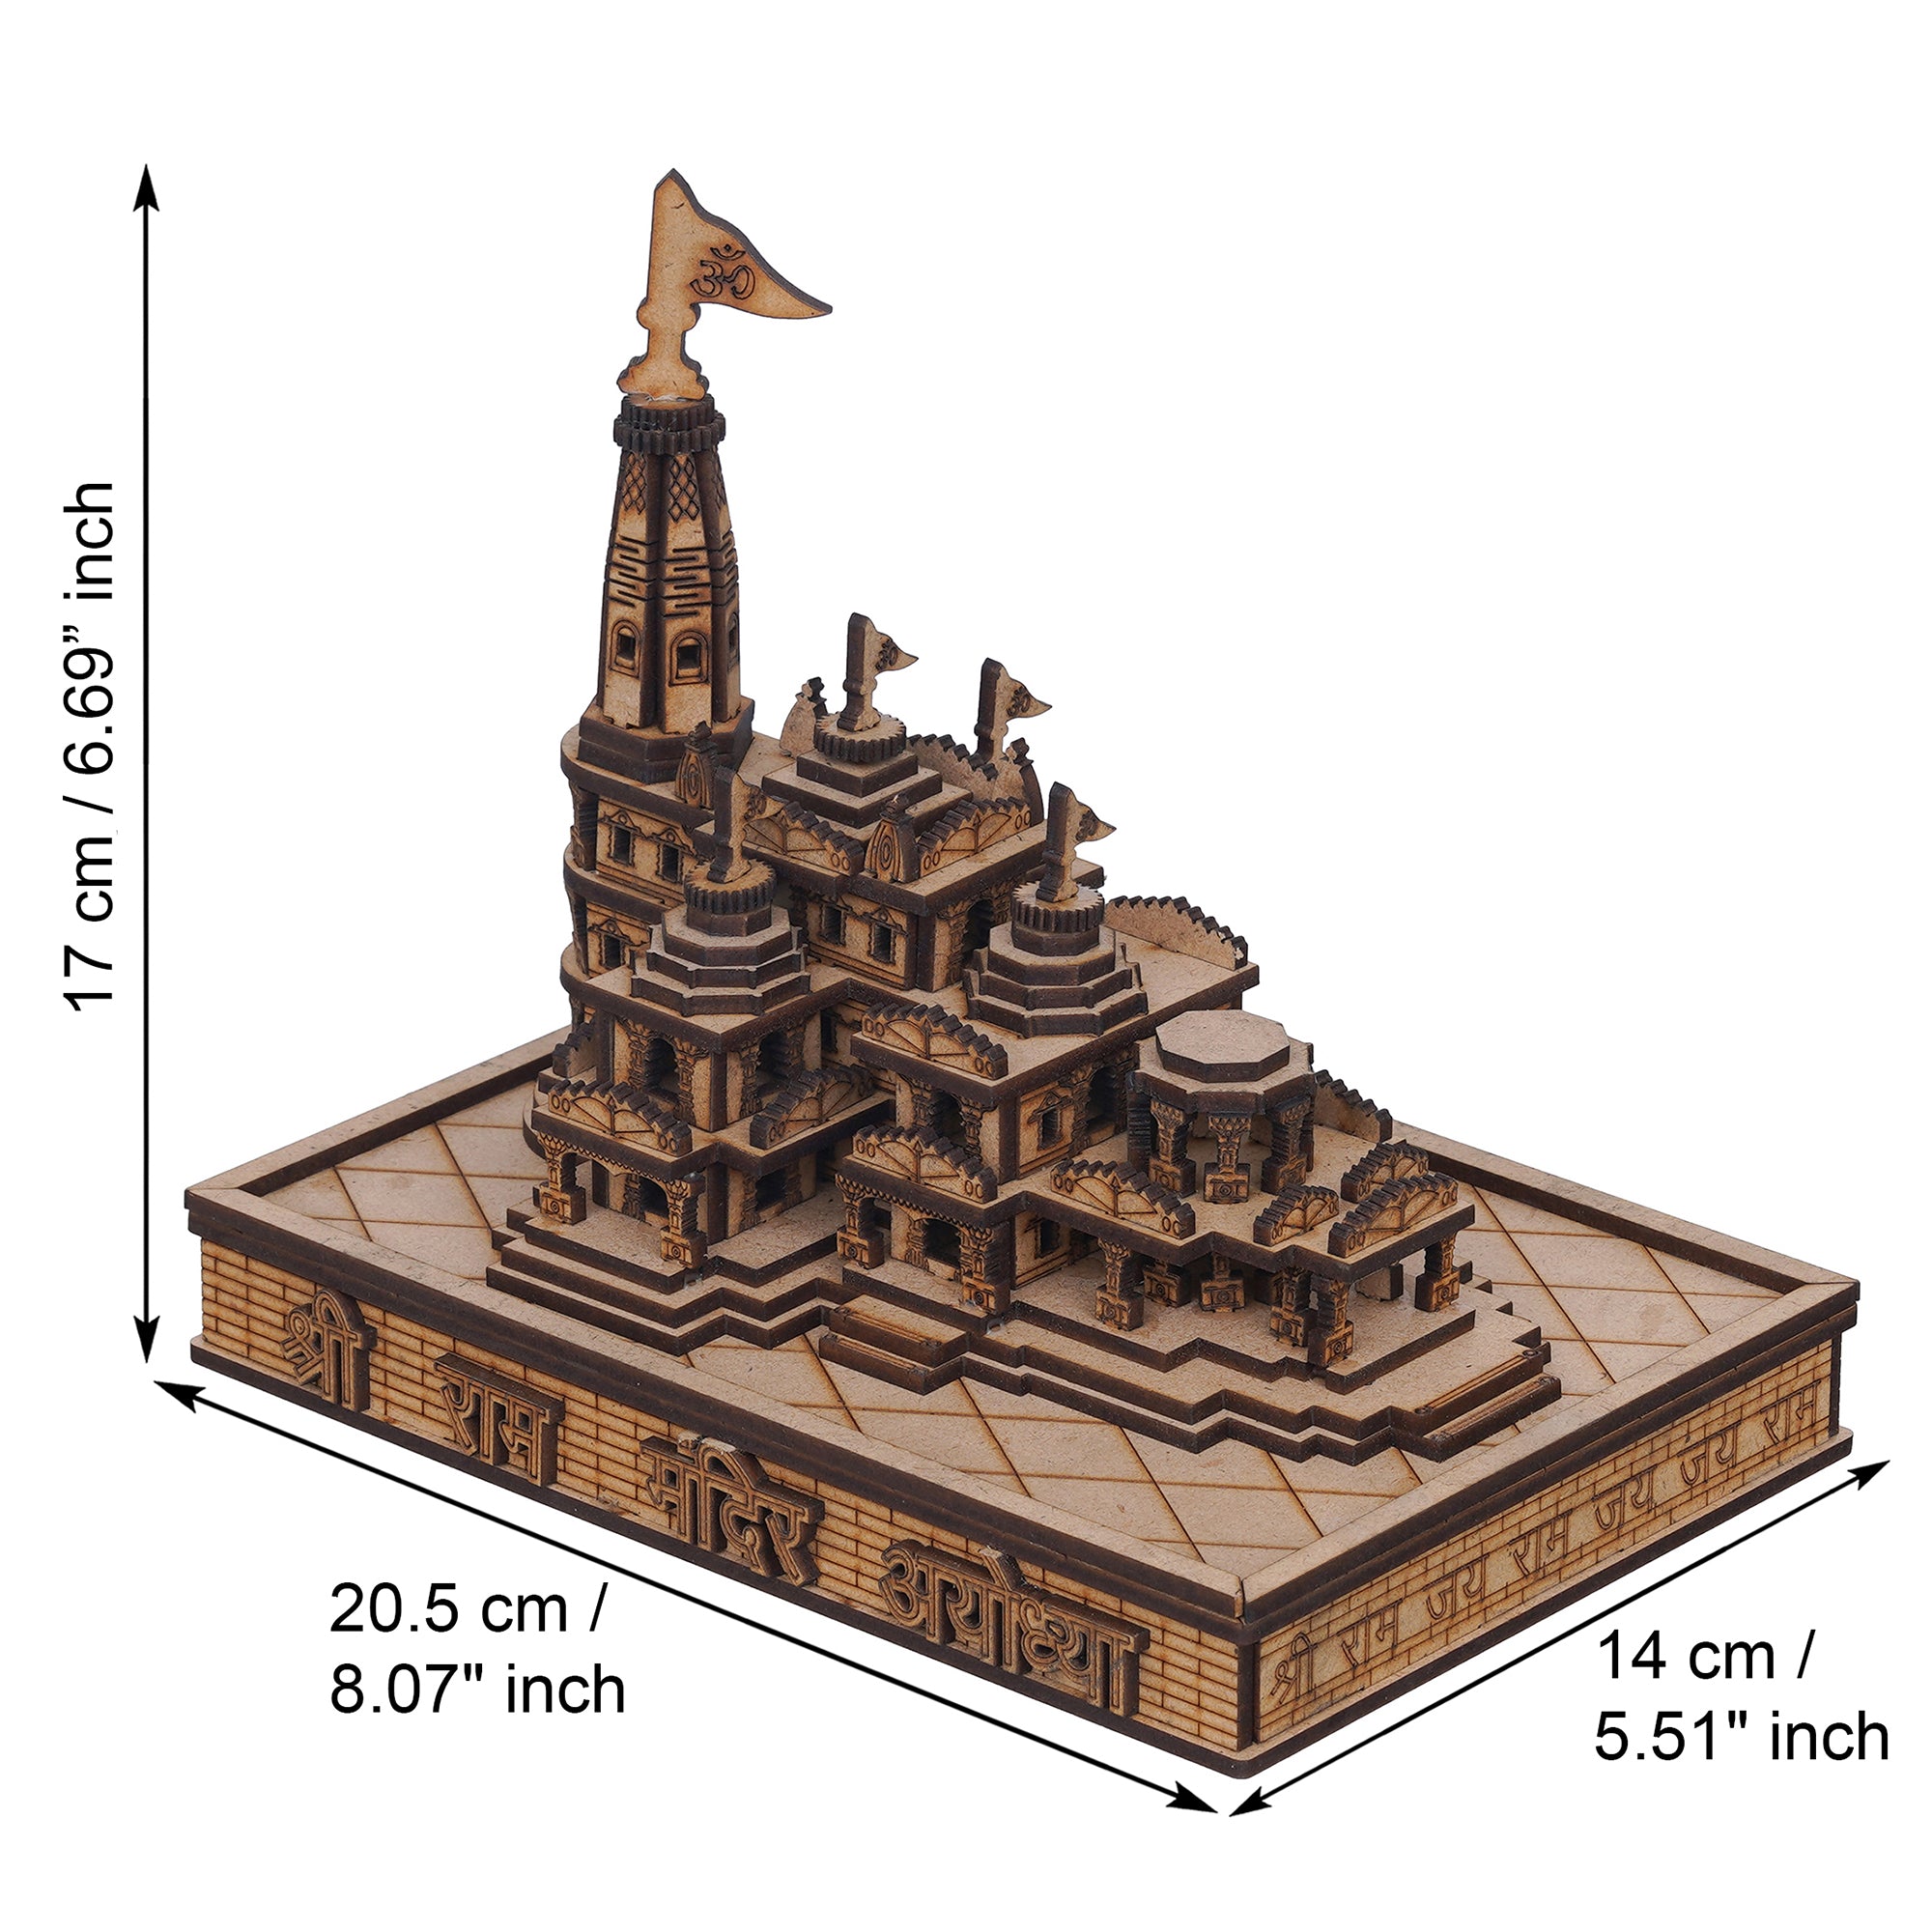 eCraftIndia Shri Ram Mandir Ayodhya Model - Wooden MDF Craftsmanship Authentic Designer Temple - Ideal for Home Temple, Decor, and Spiritual Gifting (Beige, Brown) 3